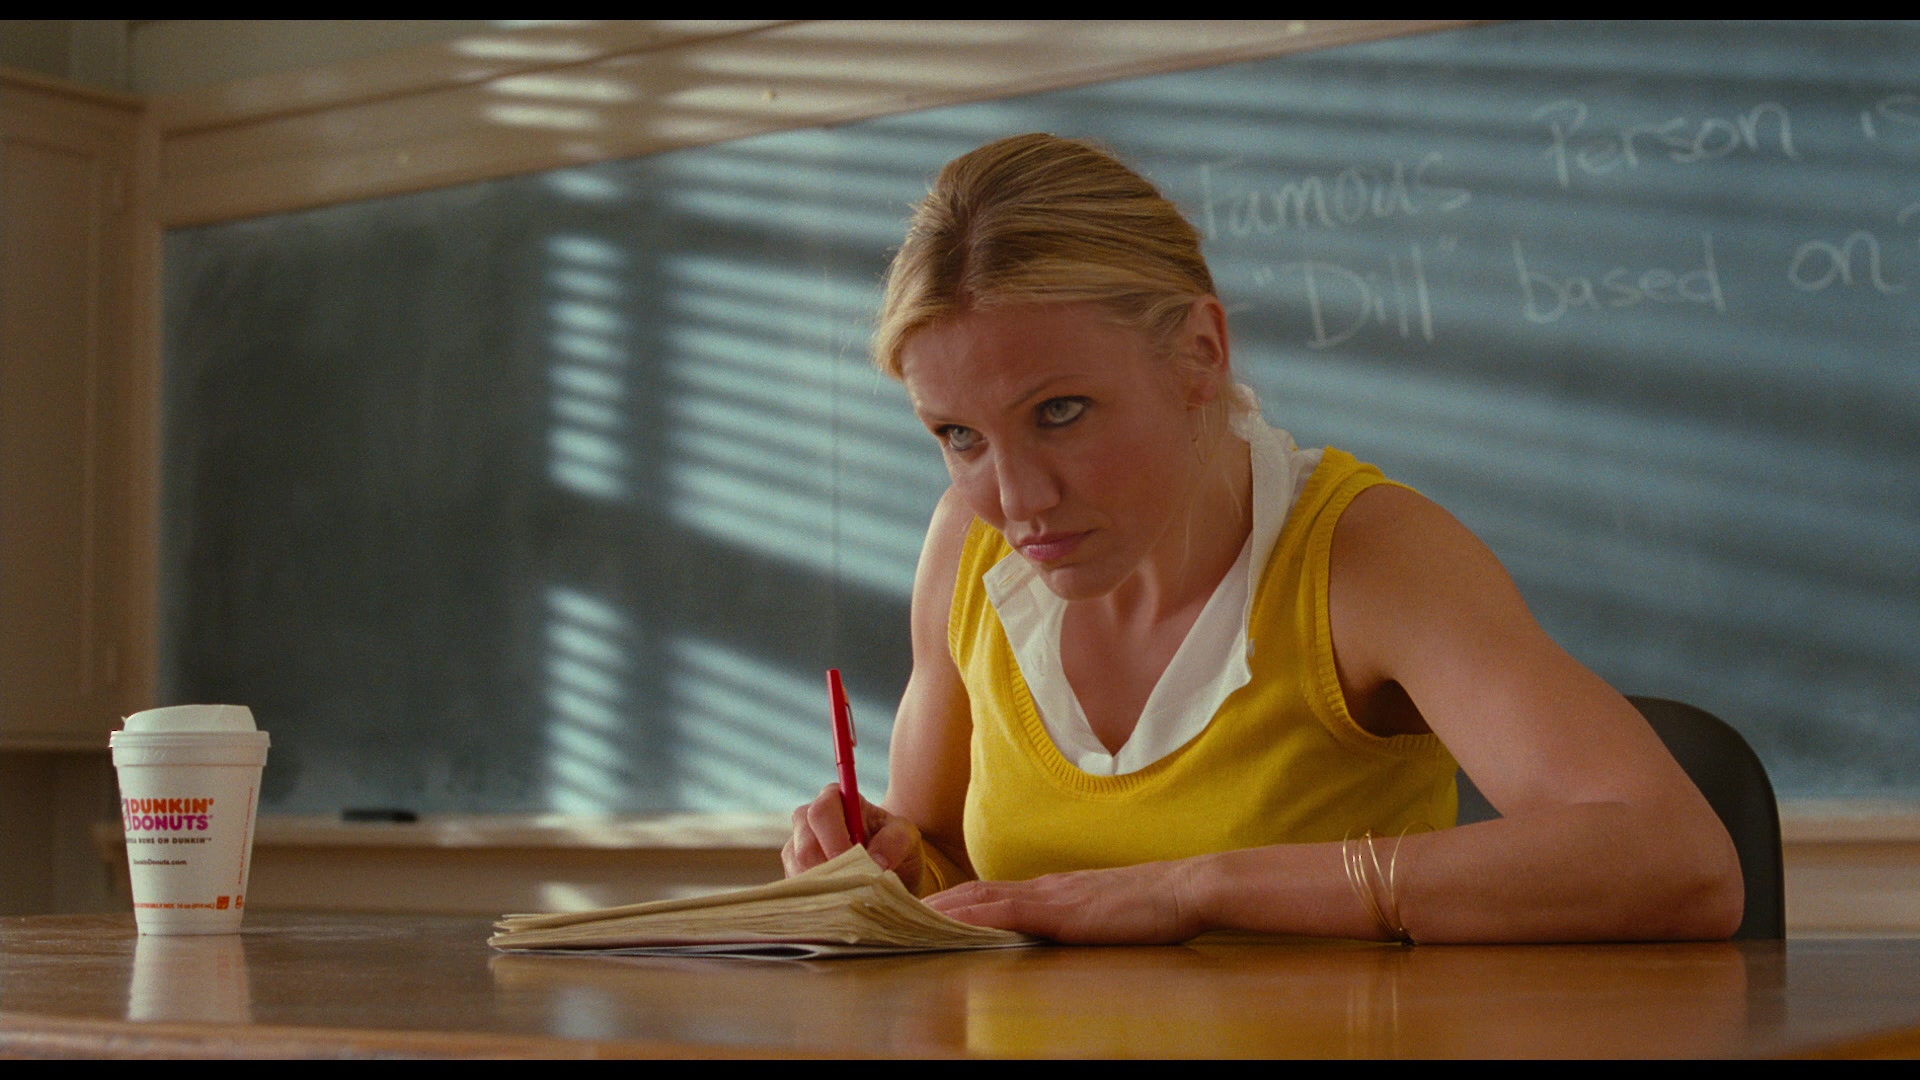 Dunkin' Coffee Of Cameron Diaz As Elizabeth Halsey In Bad Teacher (...